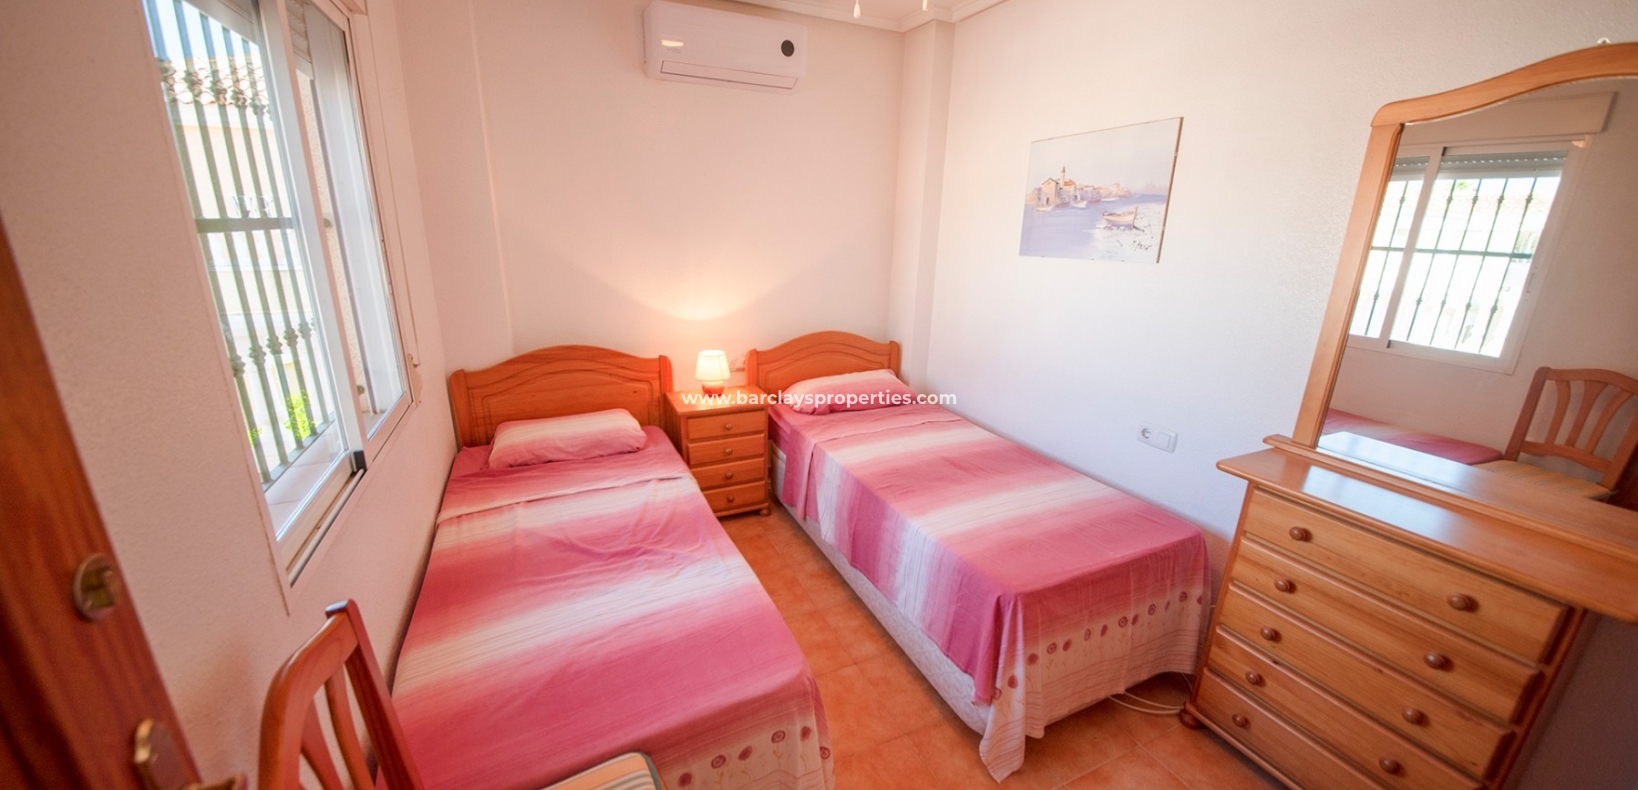 Bedroom 2 - Semi-Detached Property For Sale In La Marina Spain 